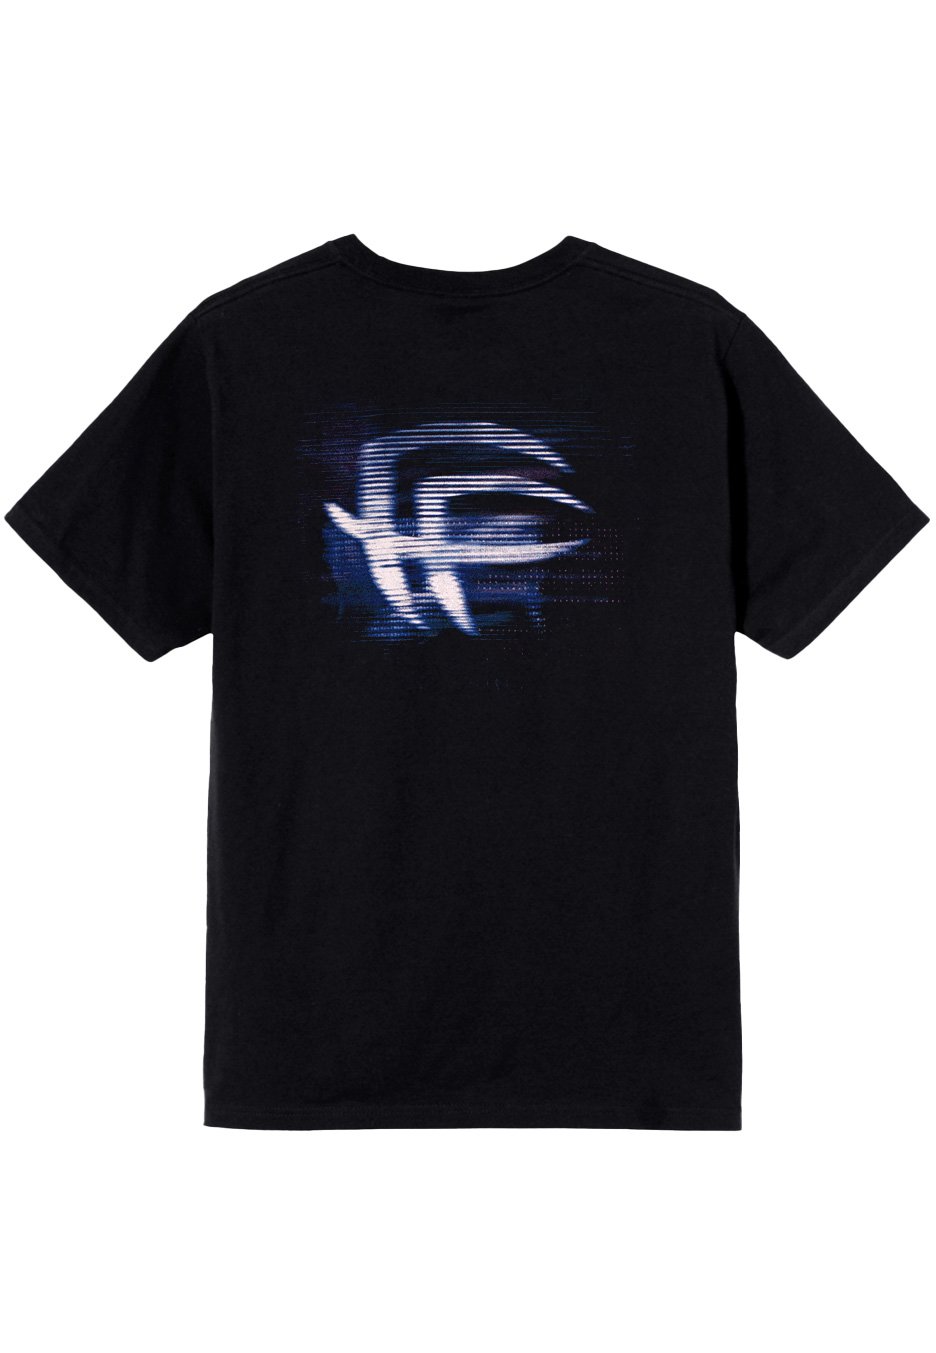 Fear Factory - Demanufacture - T-Shirt